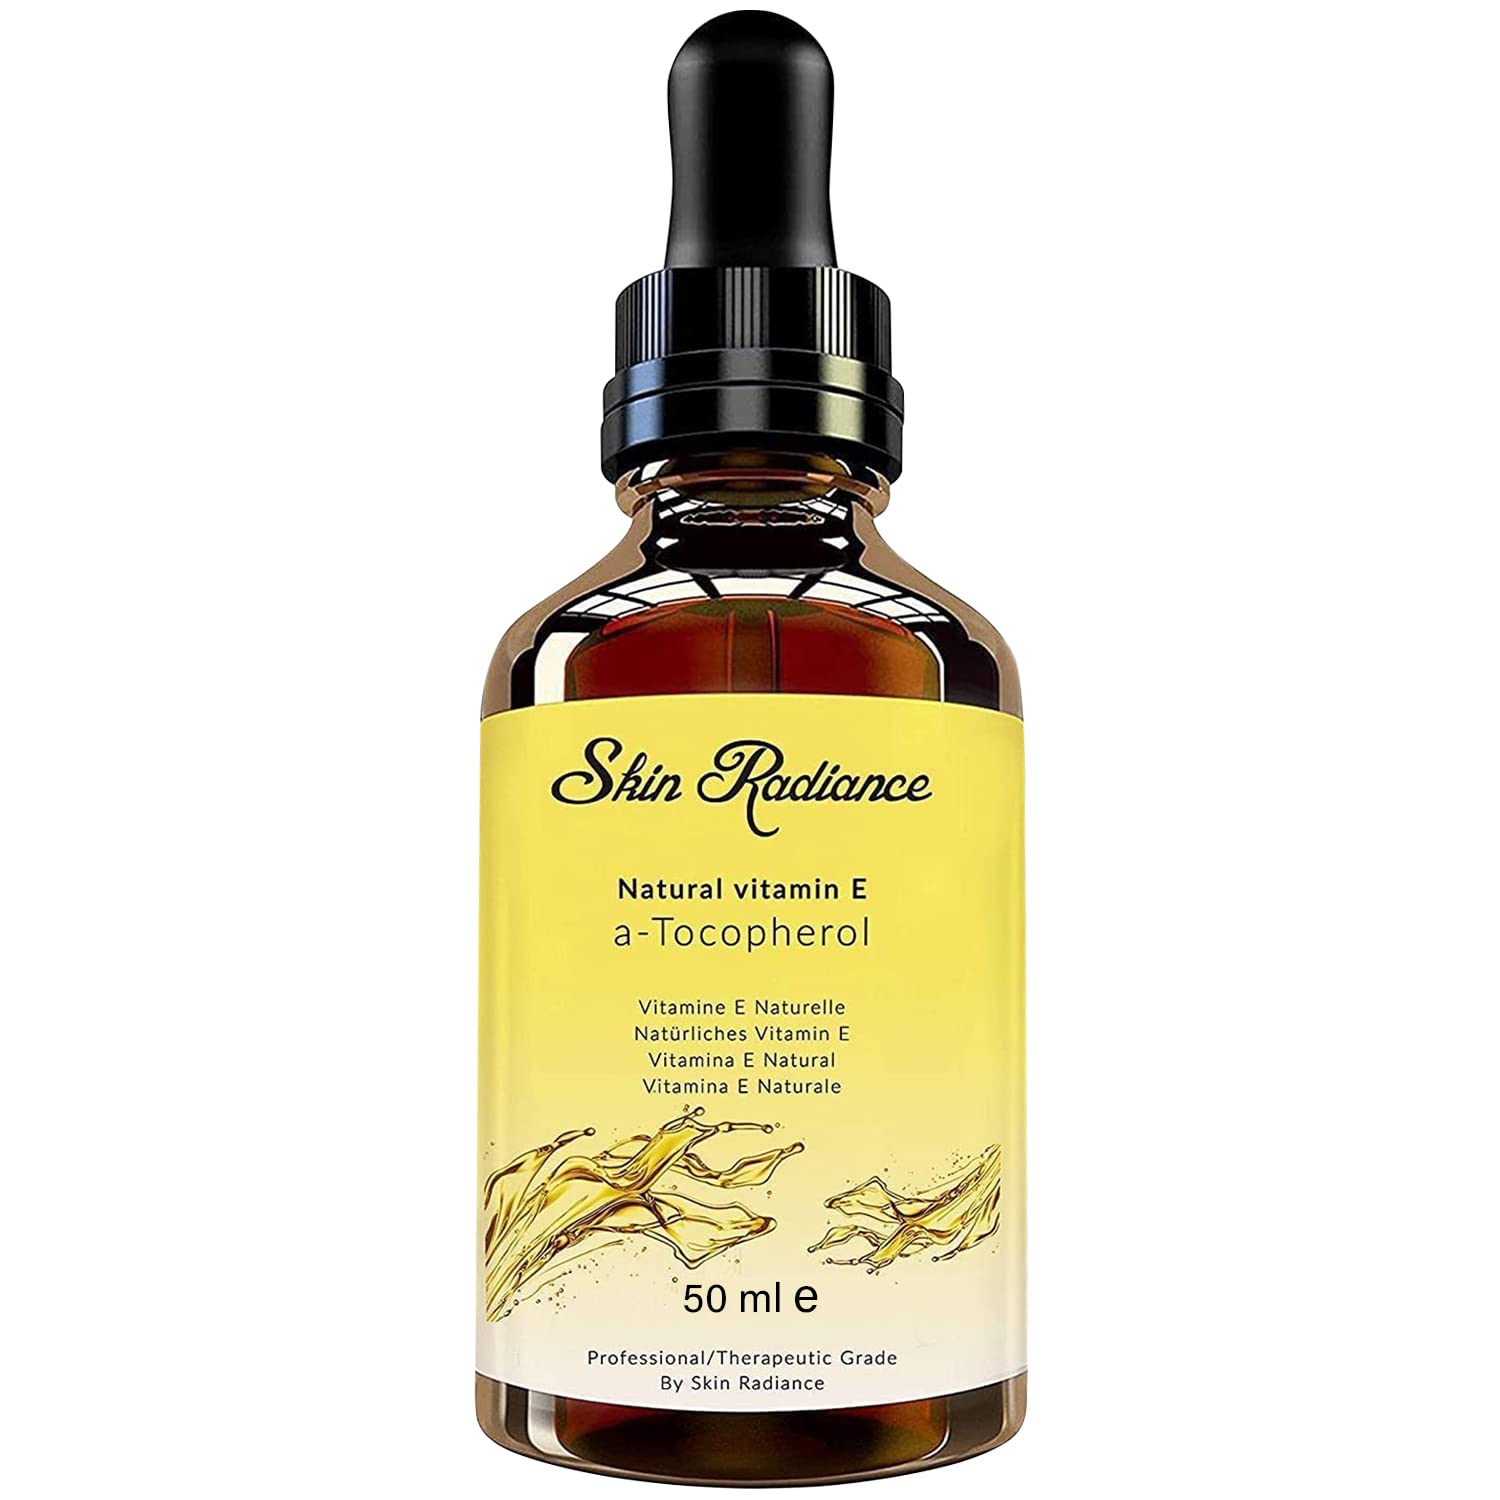 Skin Radiance 100% Pure Vitamin E Oil for Face & Skin - A Natural Highly Moisturising Oil for Skin, Nails & Hair - Vegan, No GMO & Hexane Free. 50ml